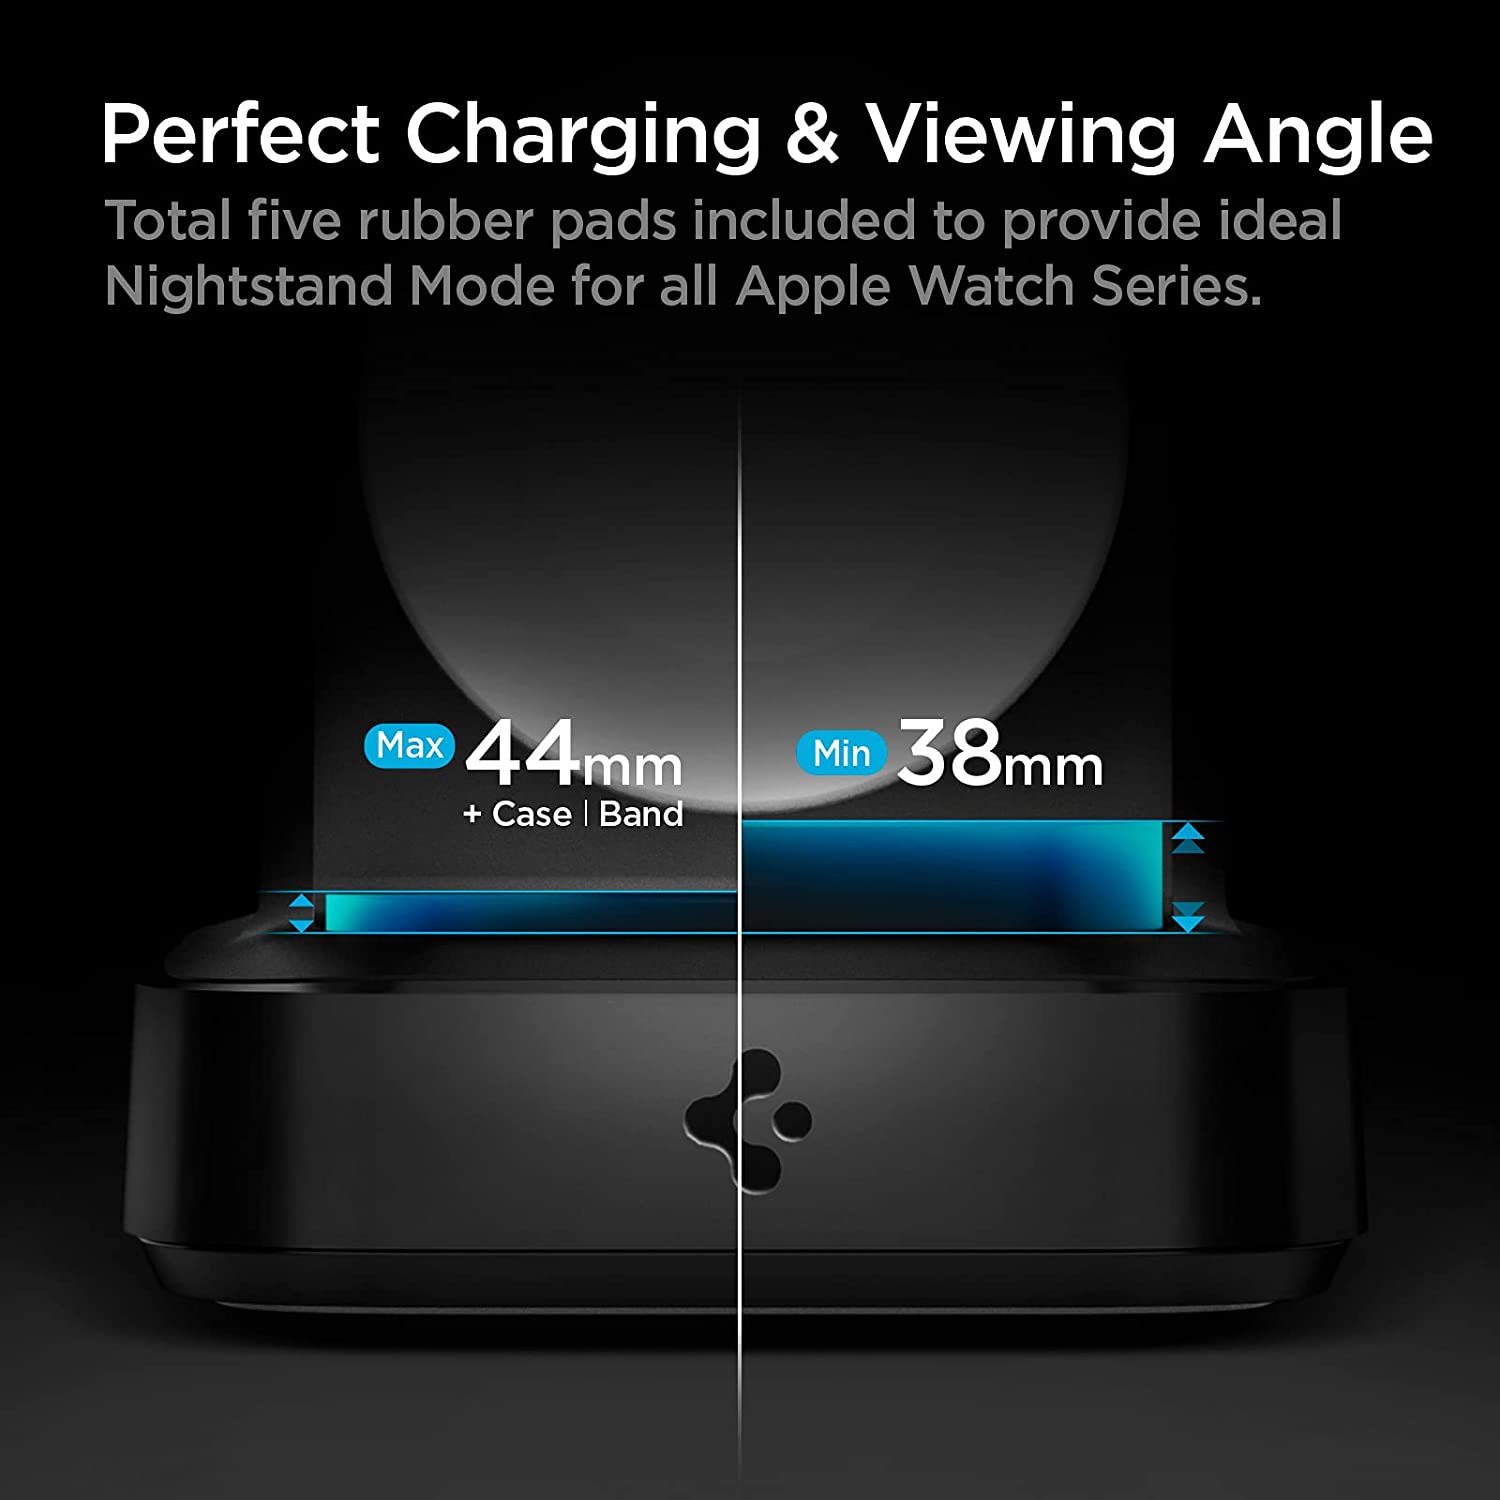 Apple Watch ArcFieldâ„¢ Wireless Charger